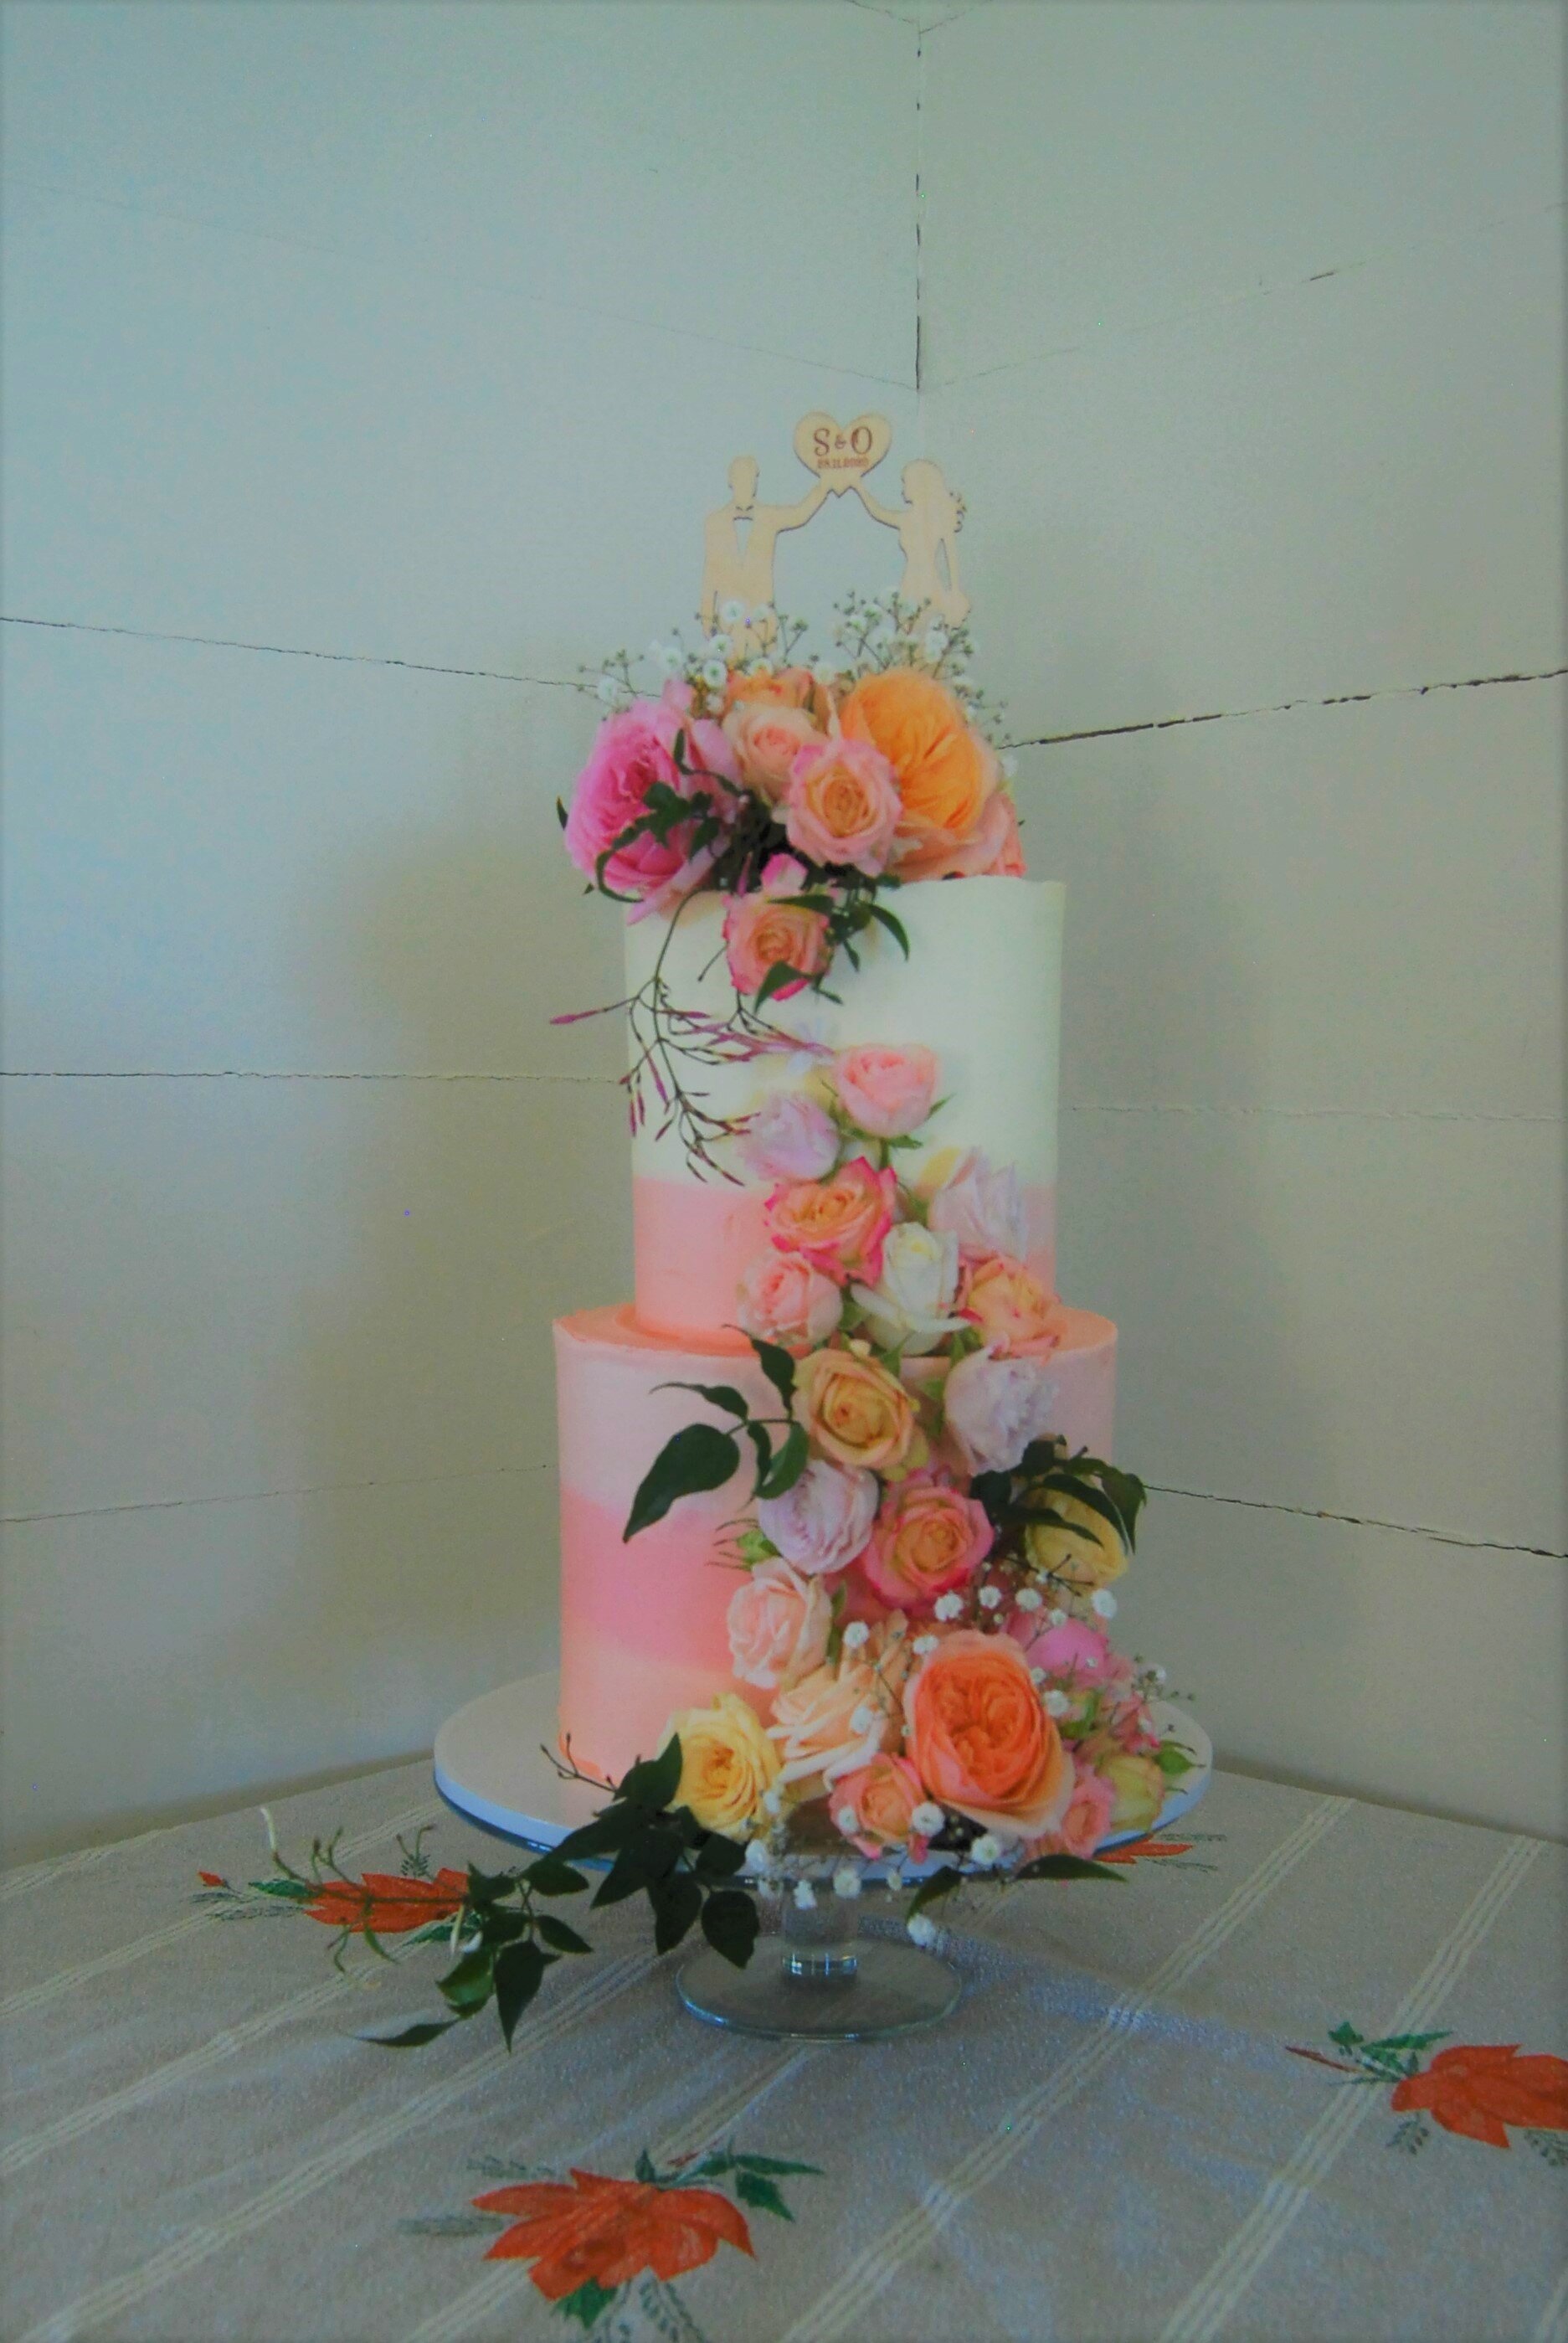 Temptation Cakes | Auckland Wedding Cake | Auckland Wedding Photographer and Videographer 